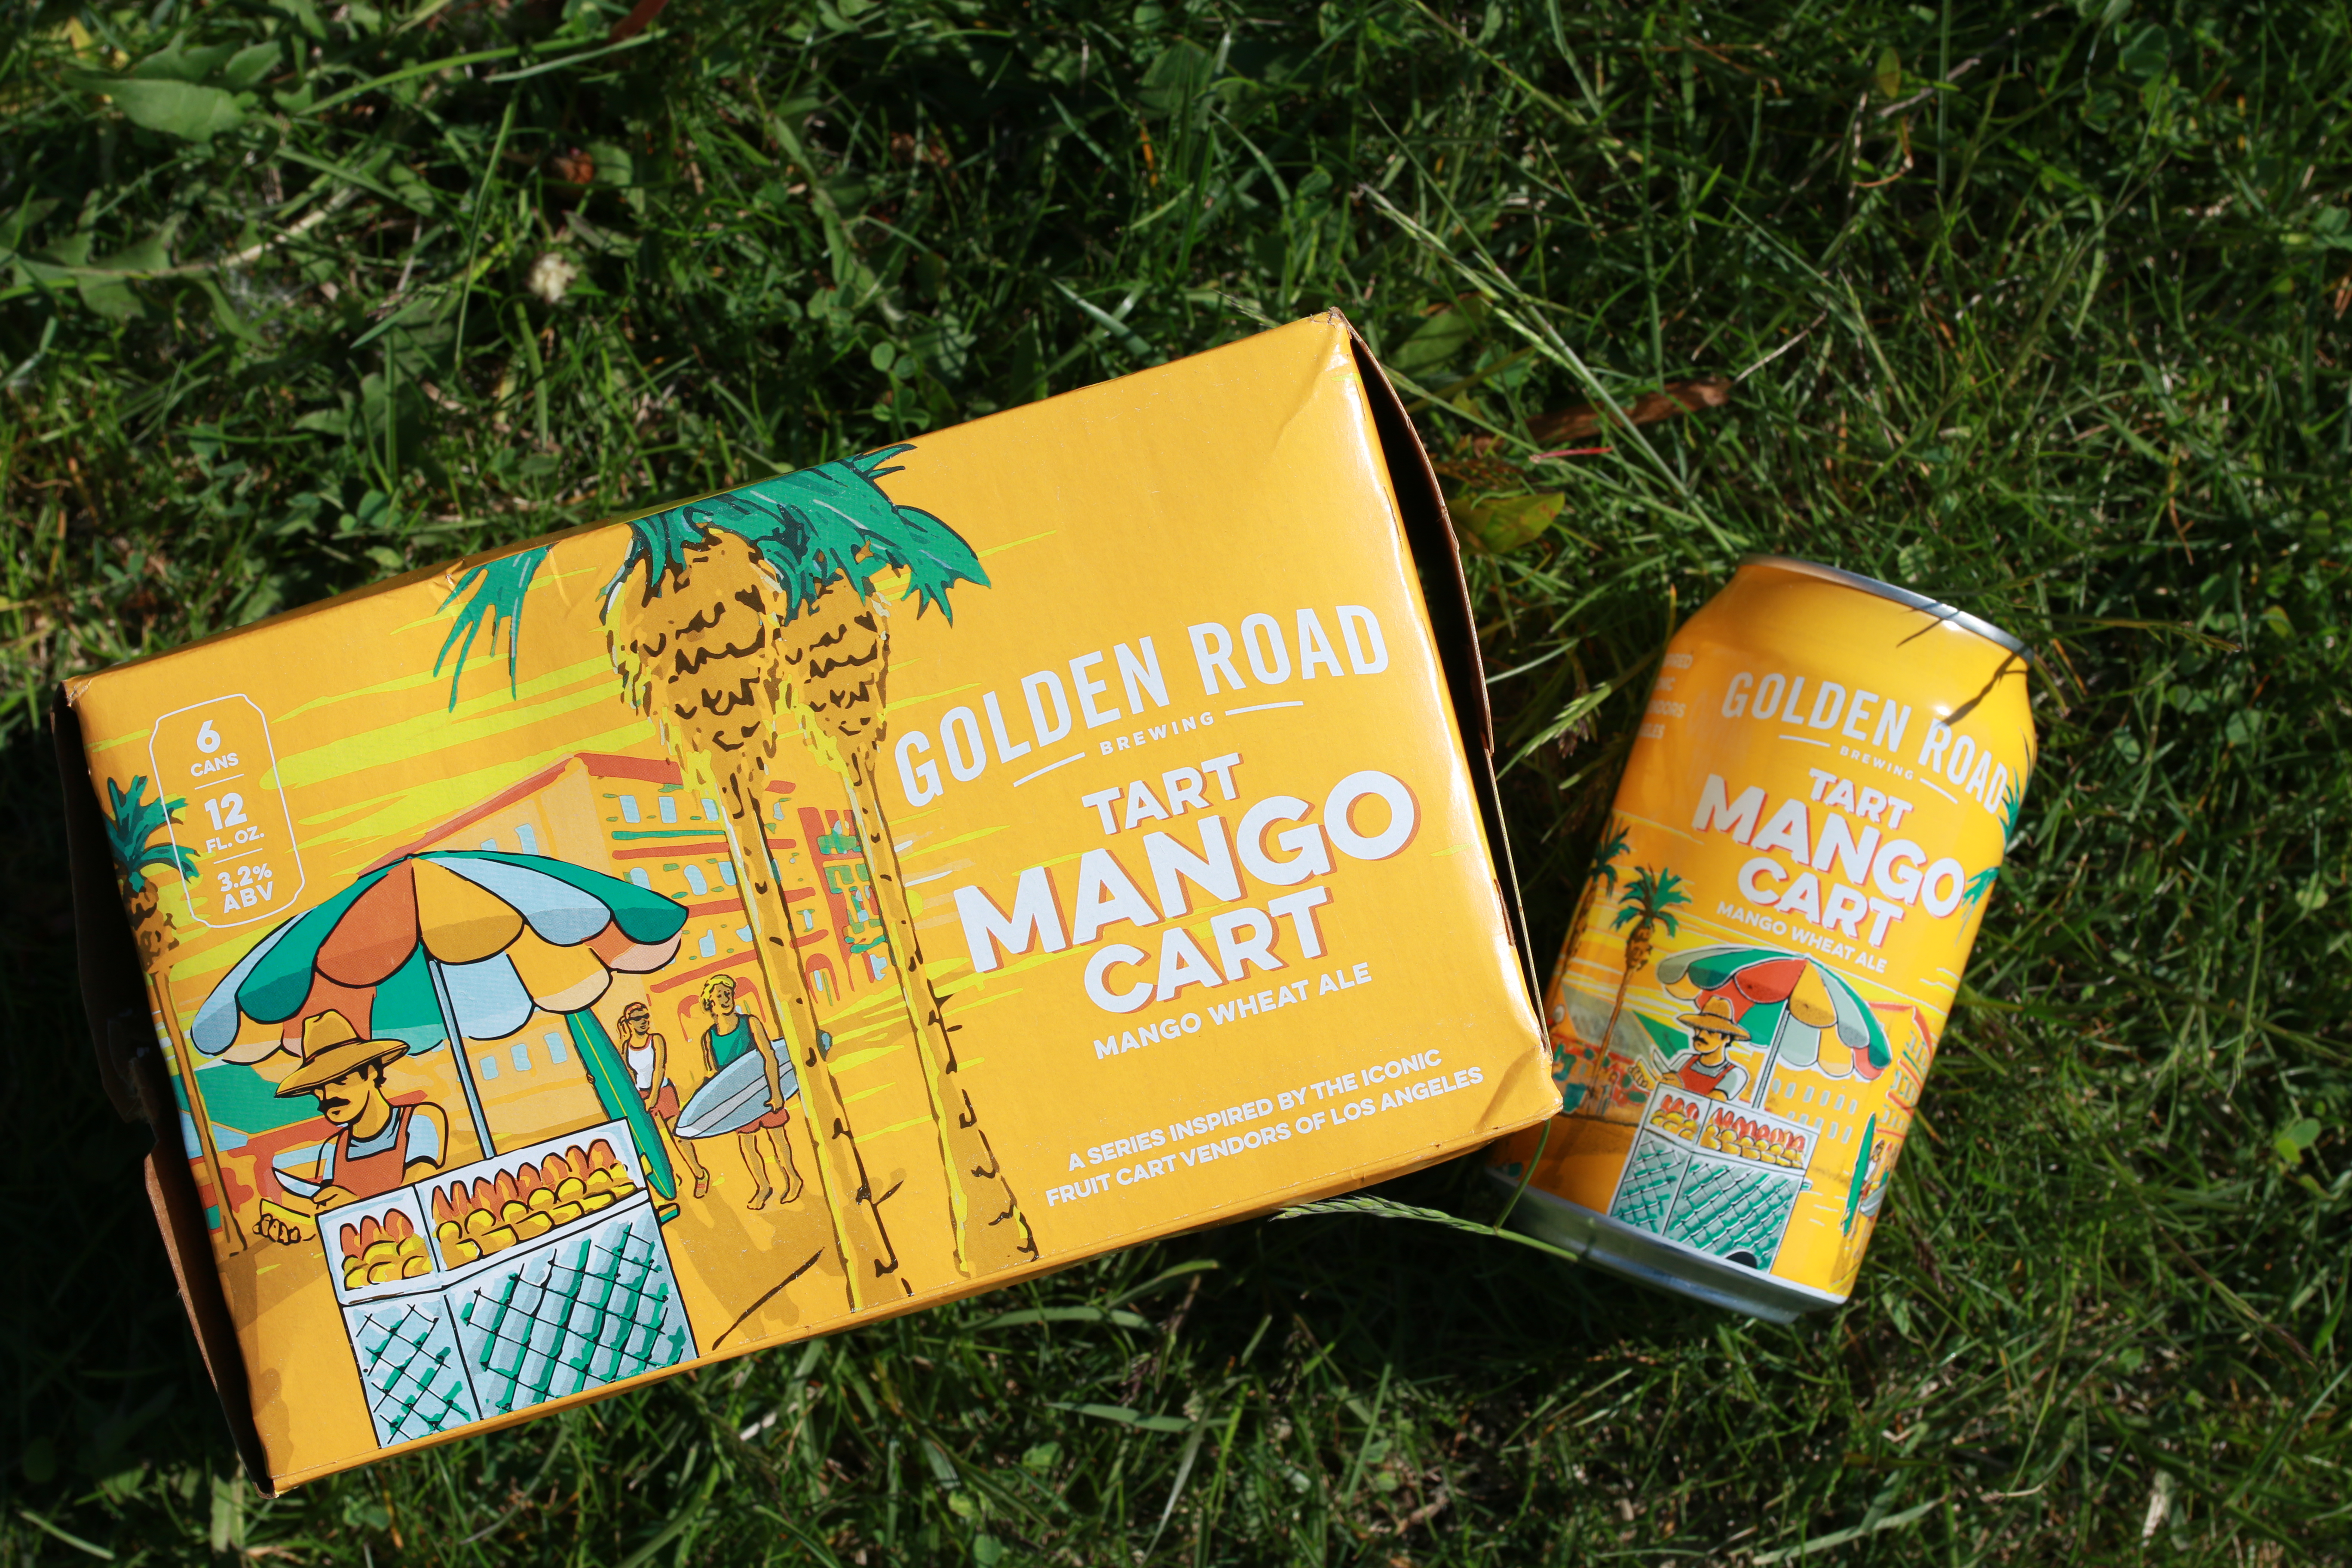 Golden Road Tart Mango Cart